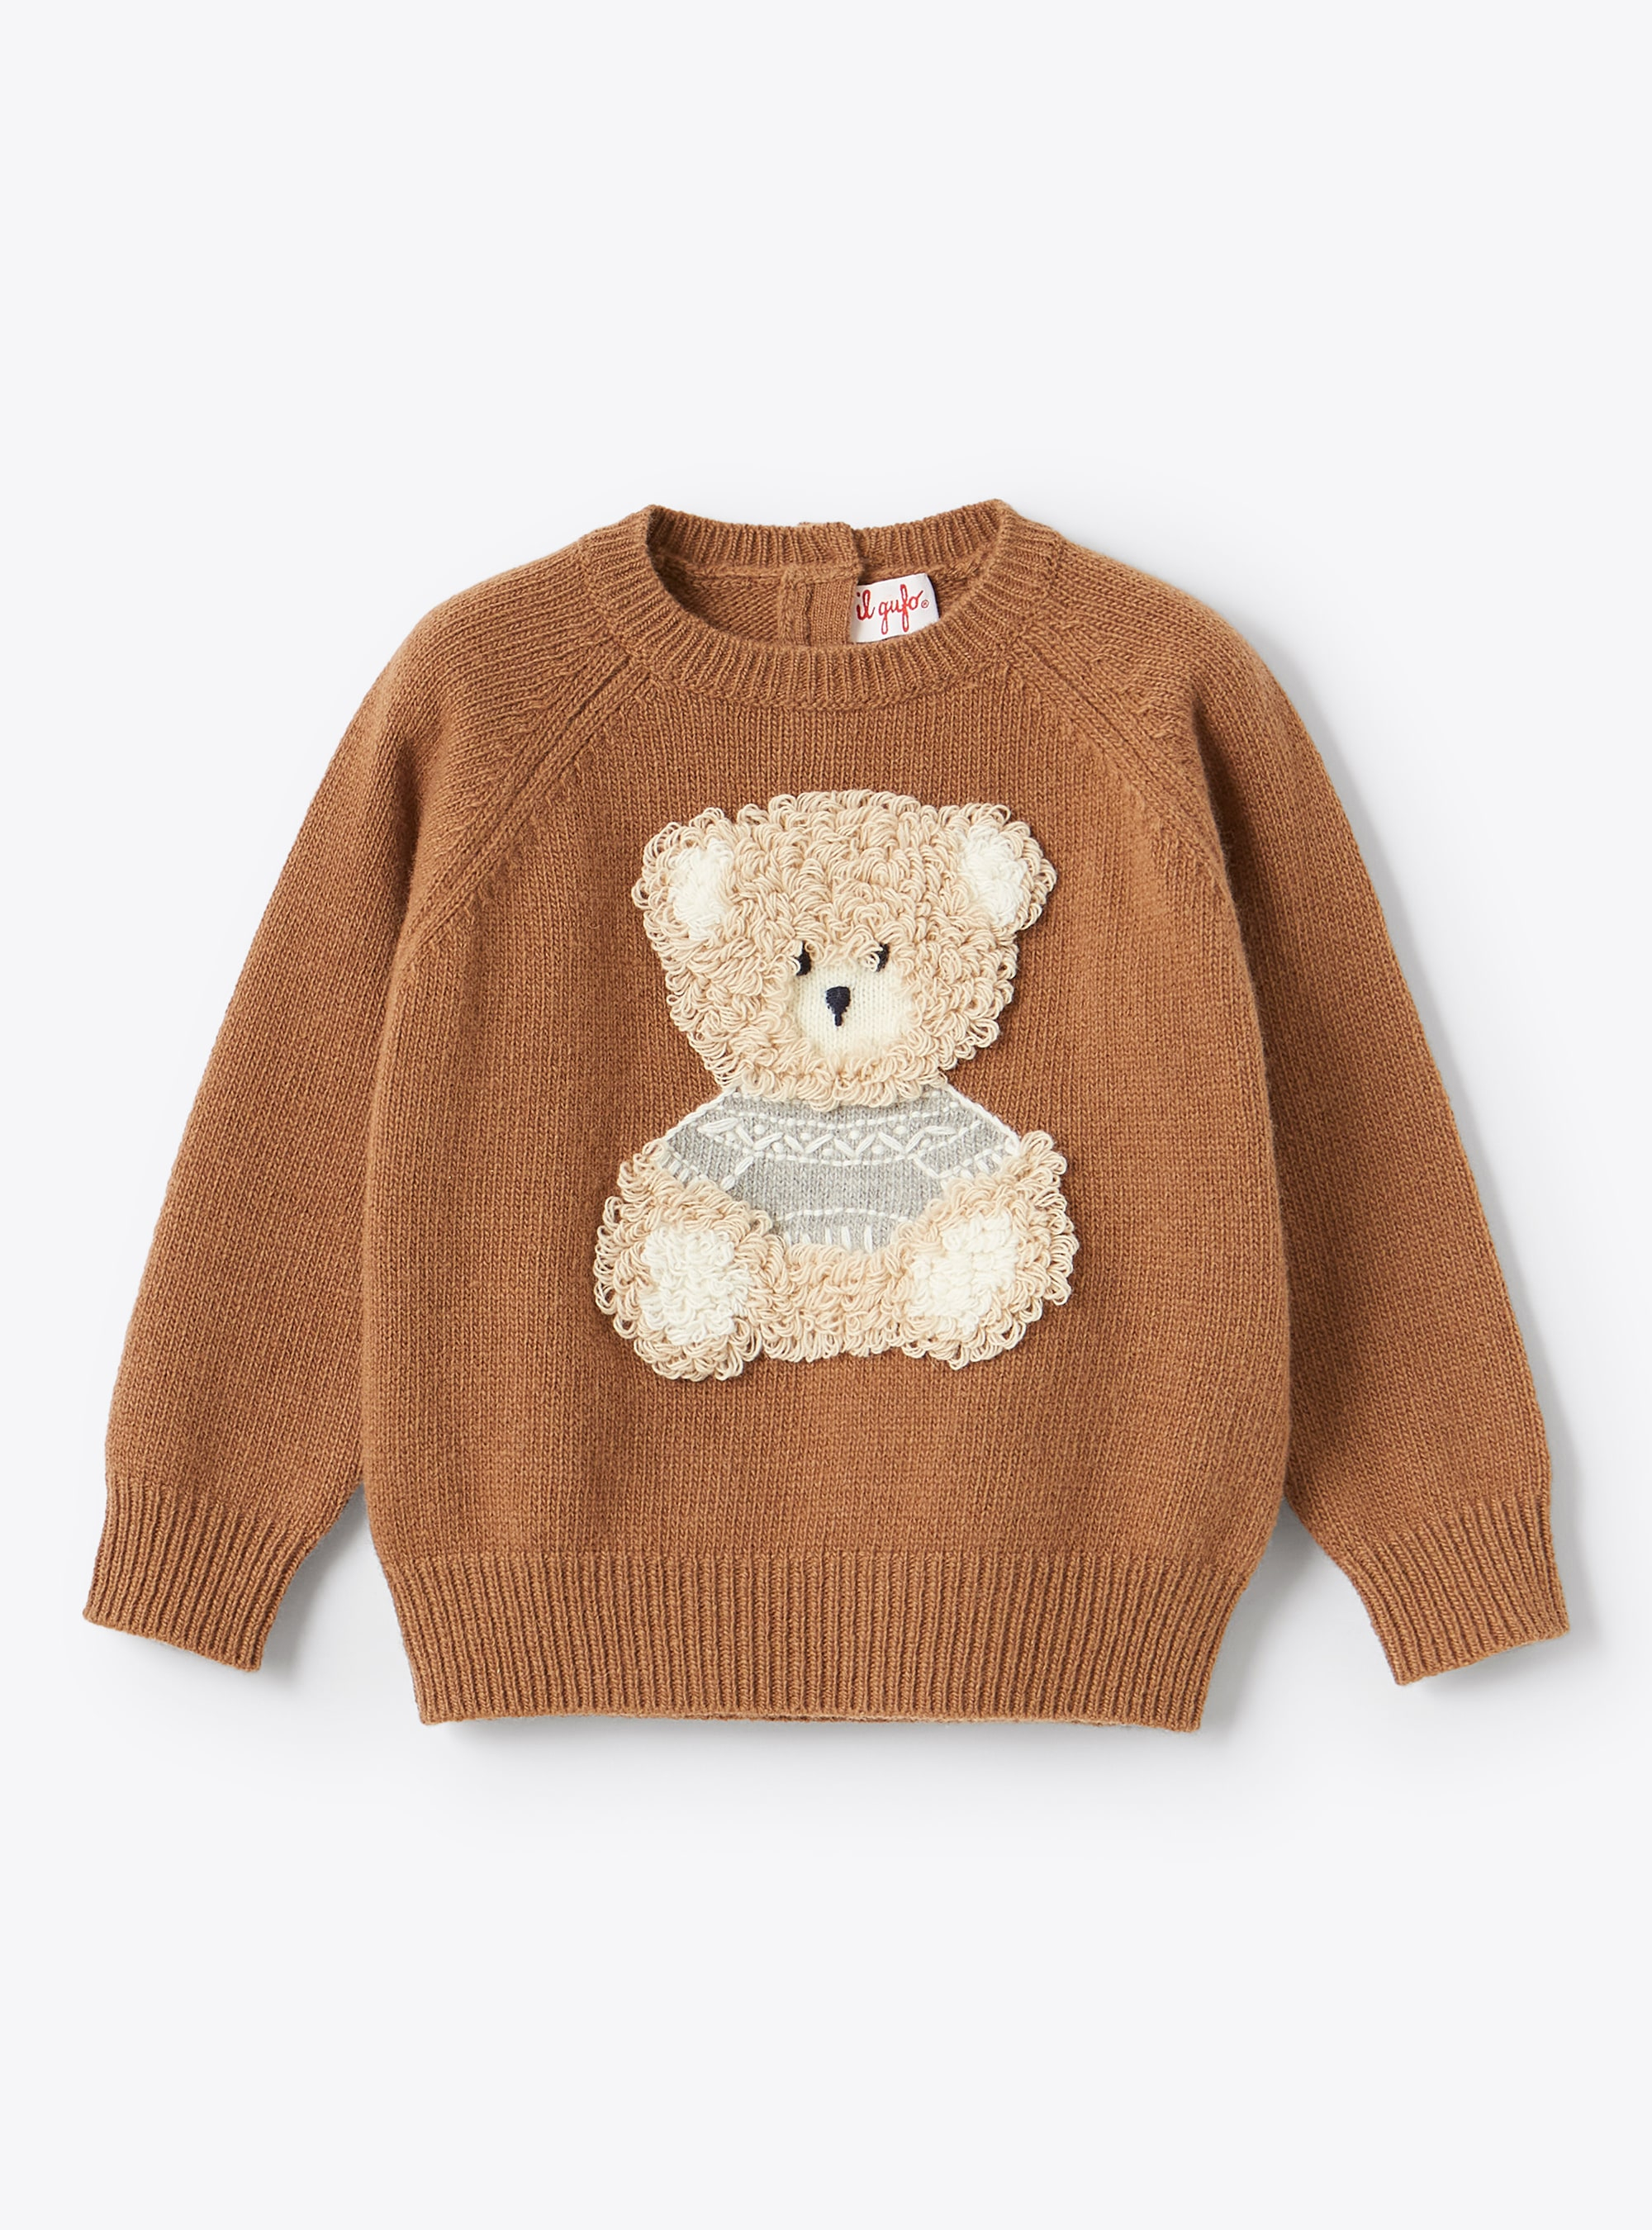 Brauner Wollpullover mit Teddybär - Pullover - Il Gufo